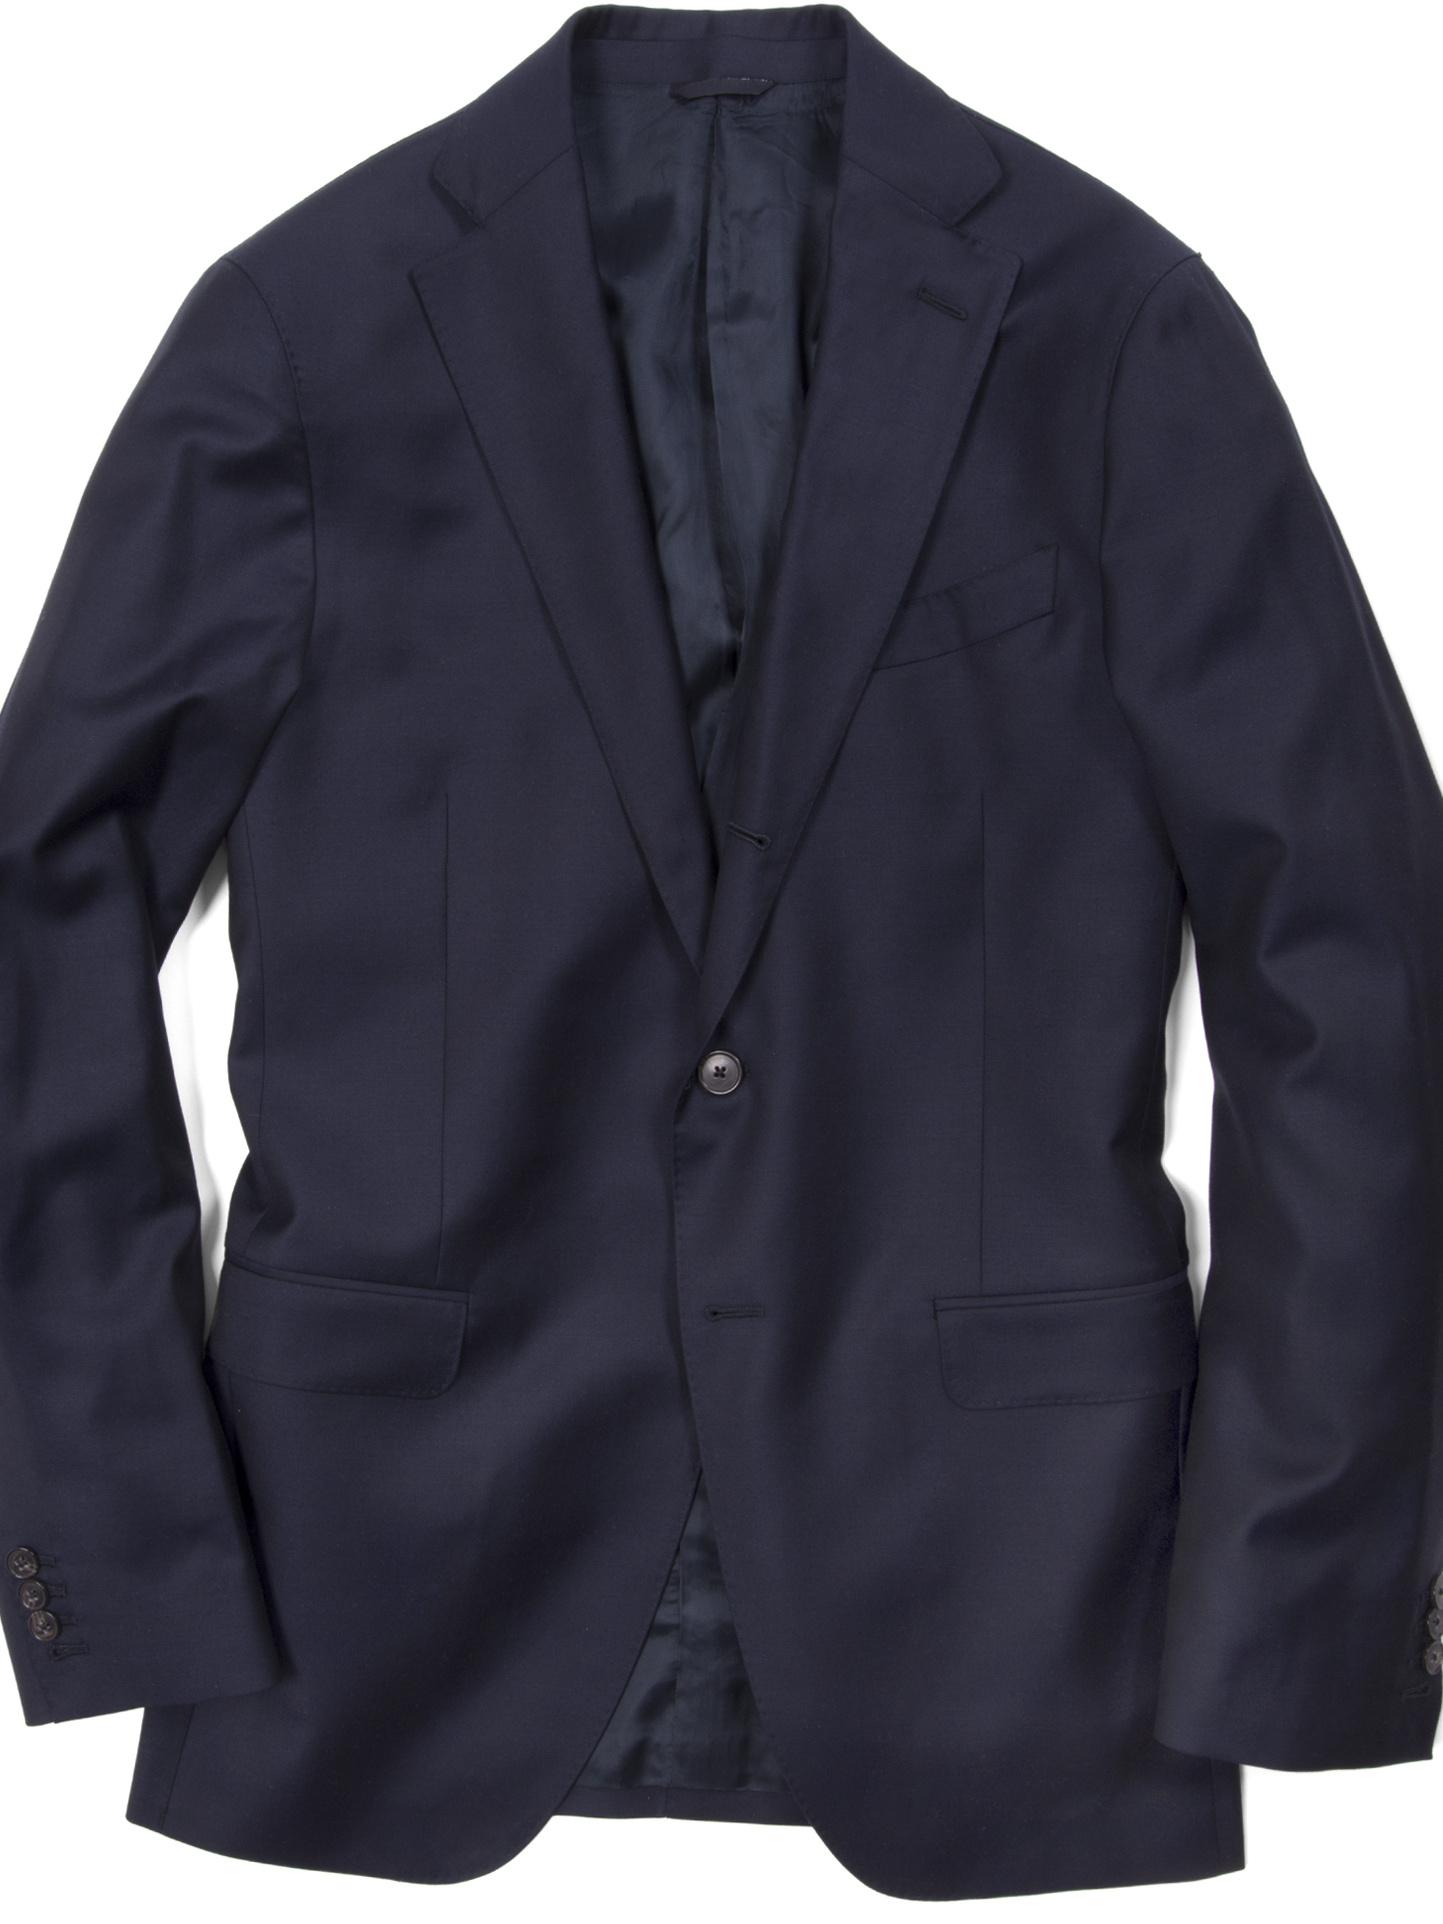 Allen Navy Suit by Proper Cloth